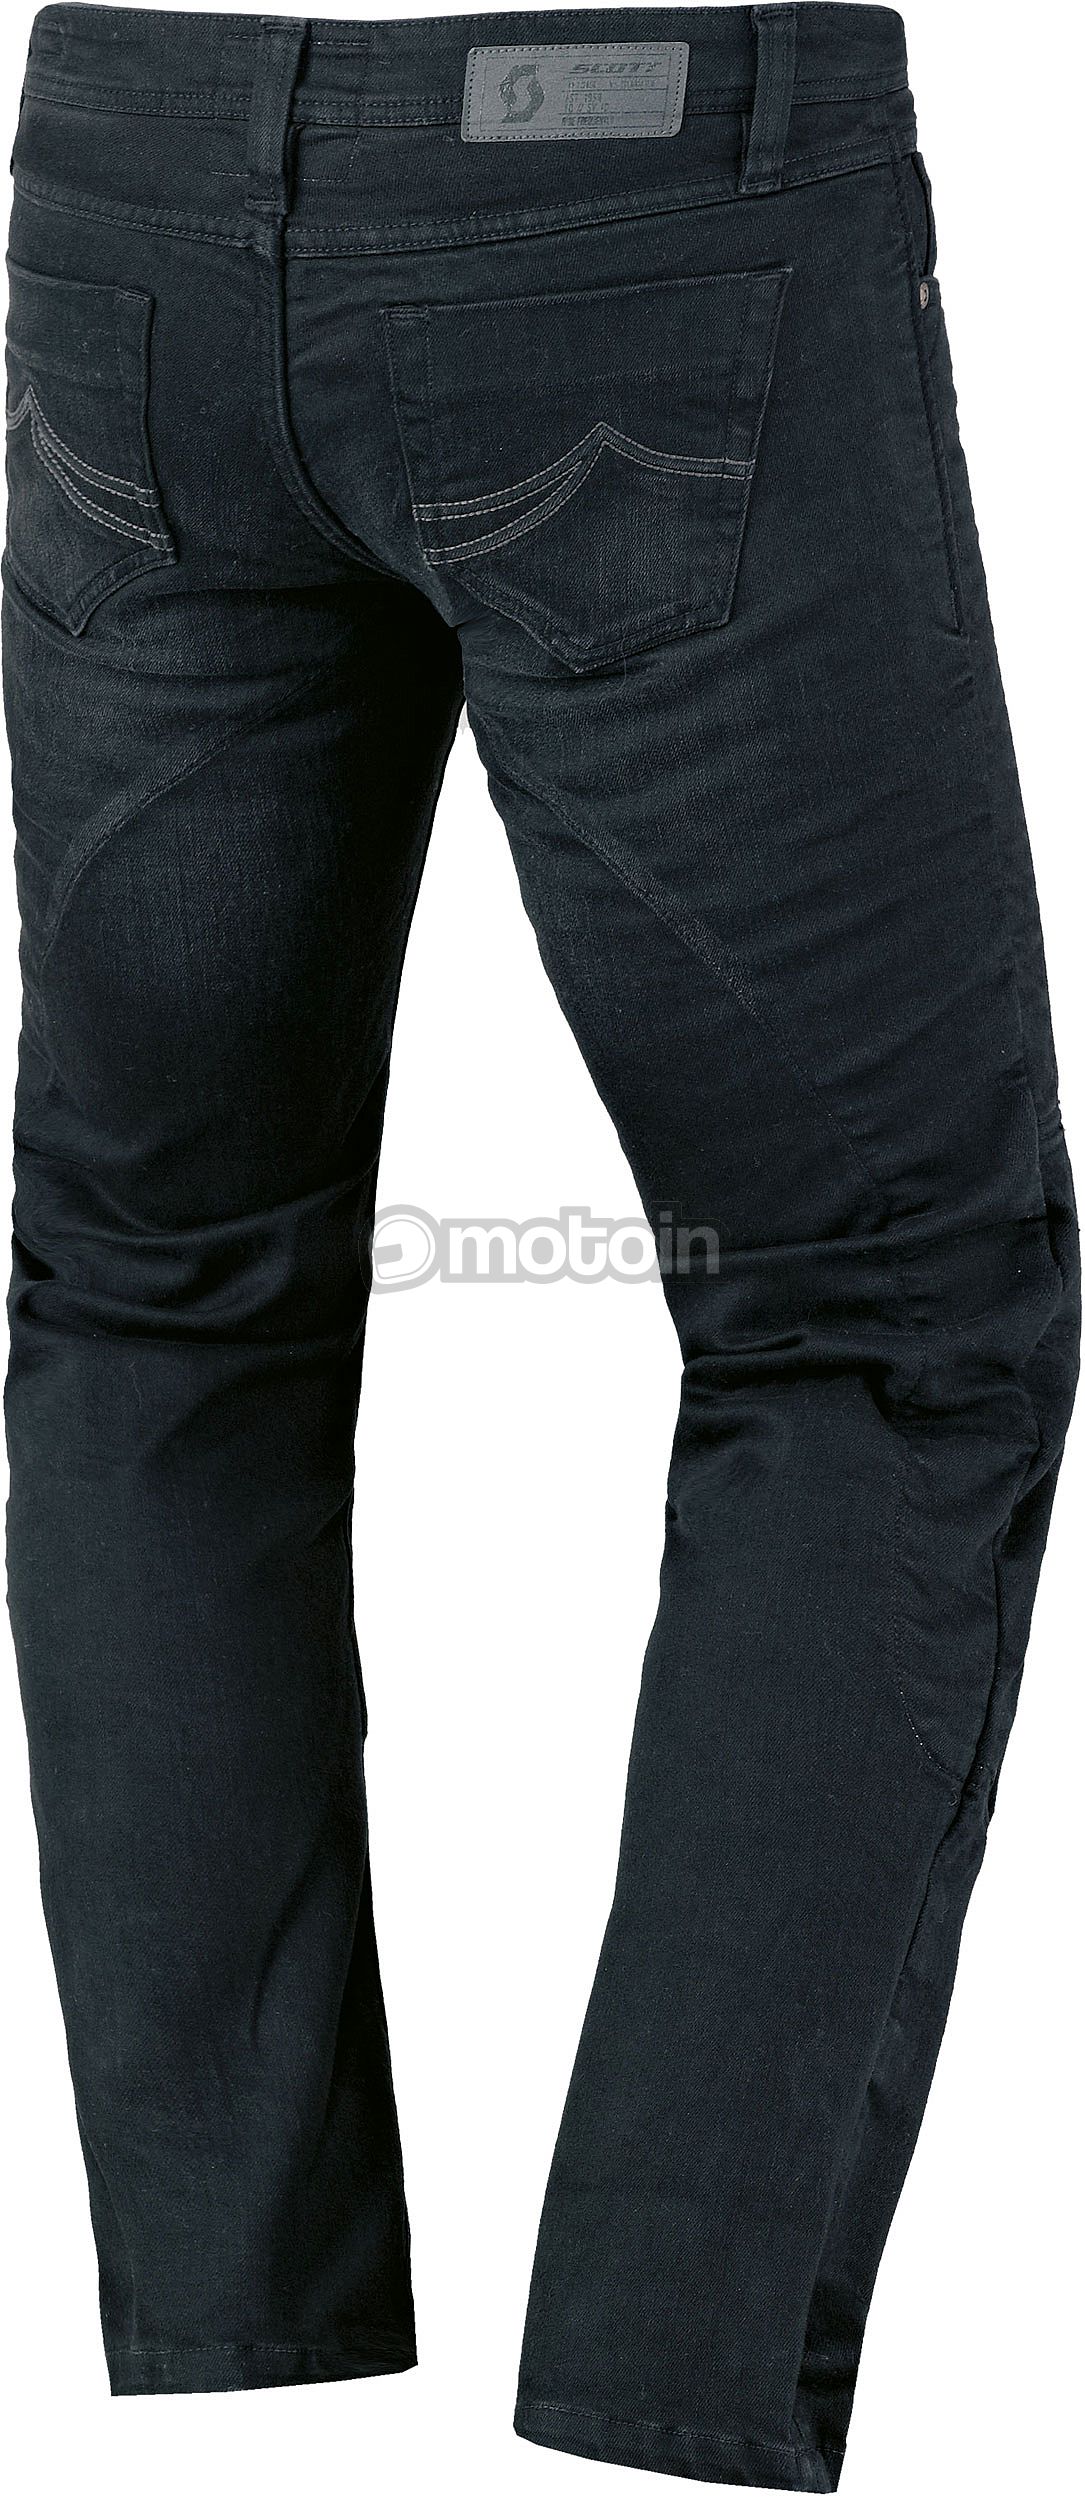 Scott Stretch, Jeans Damen - motoin.de